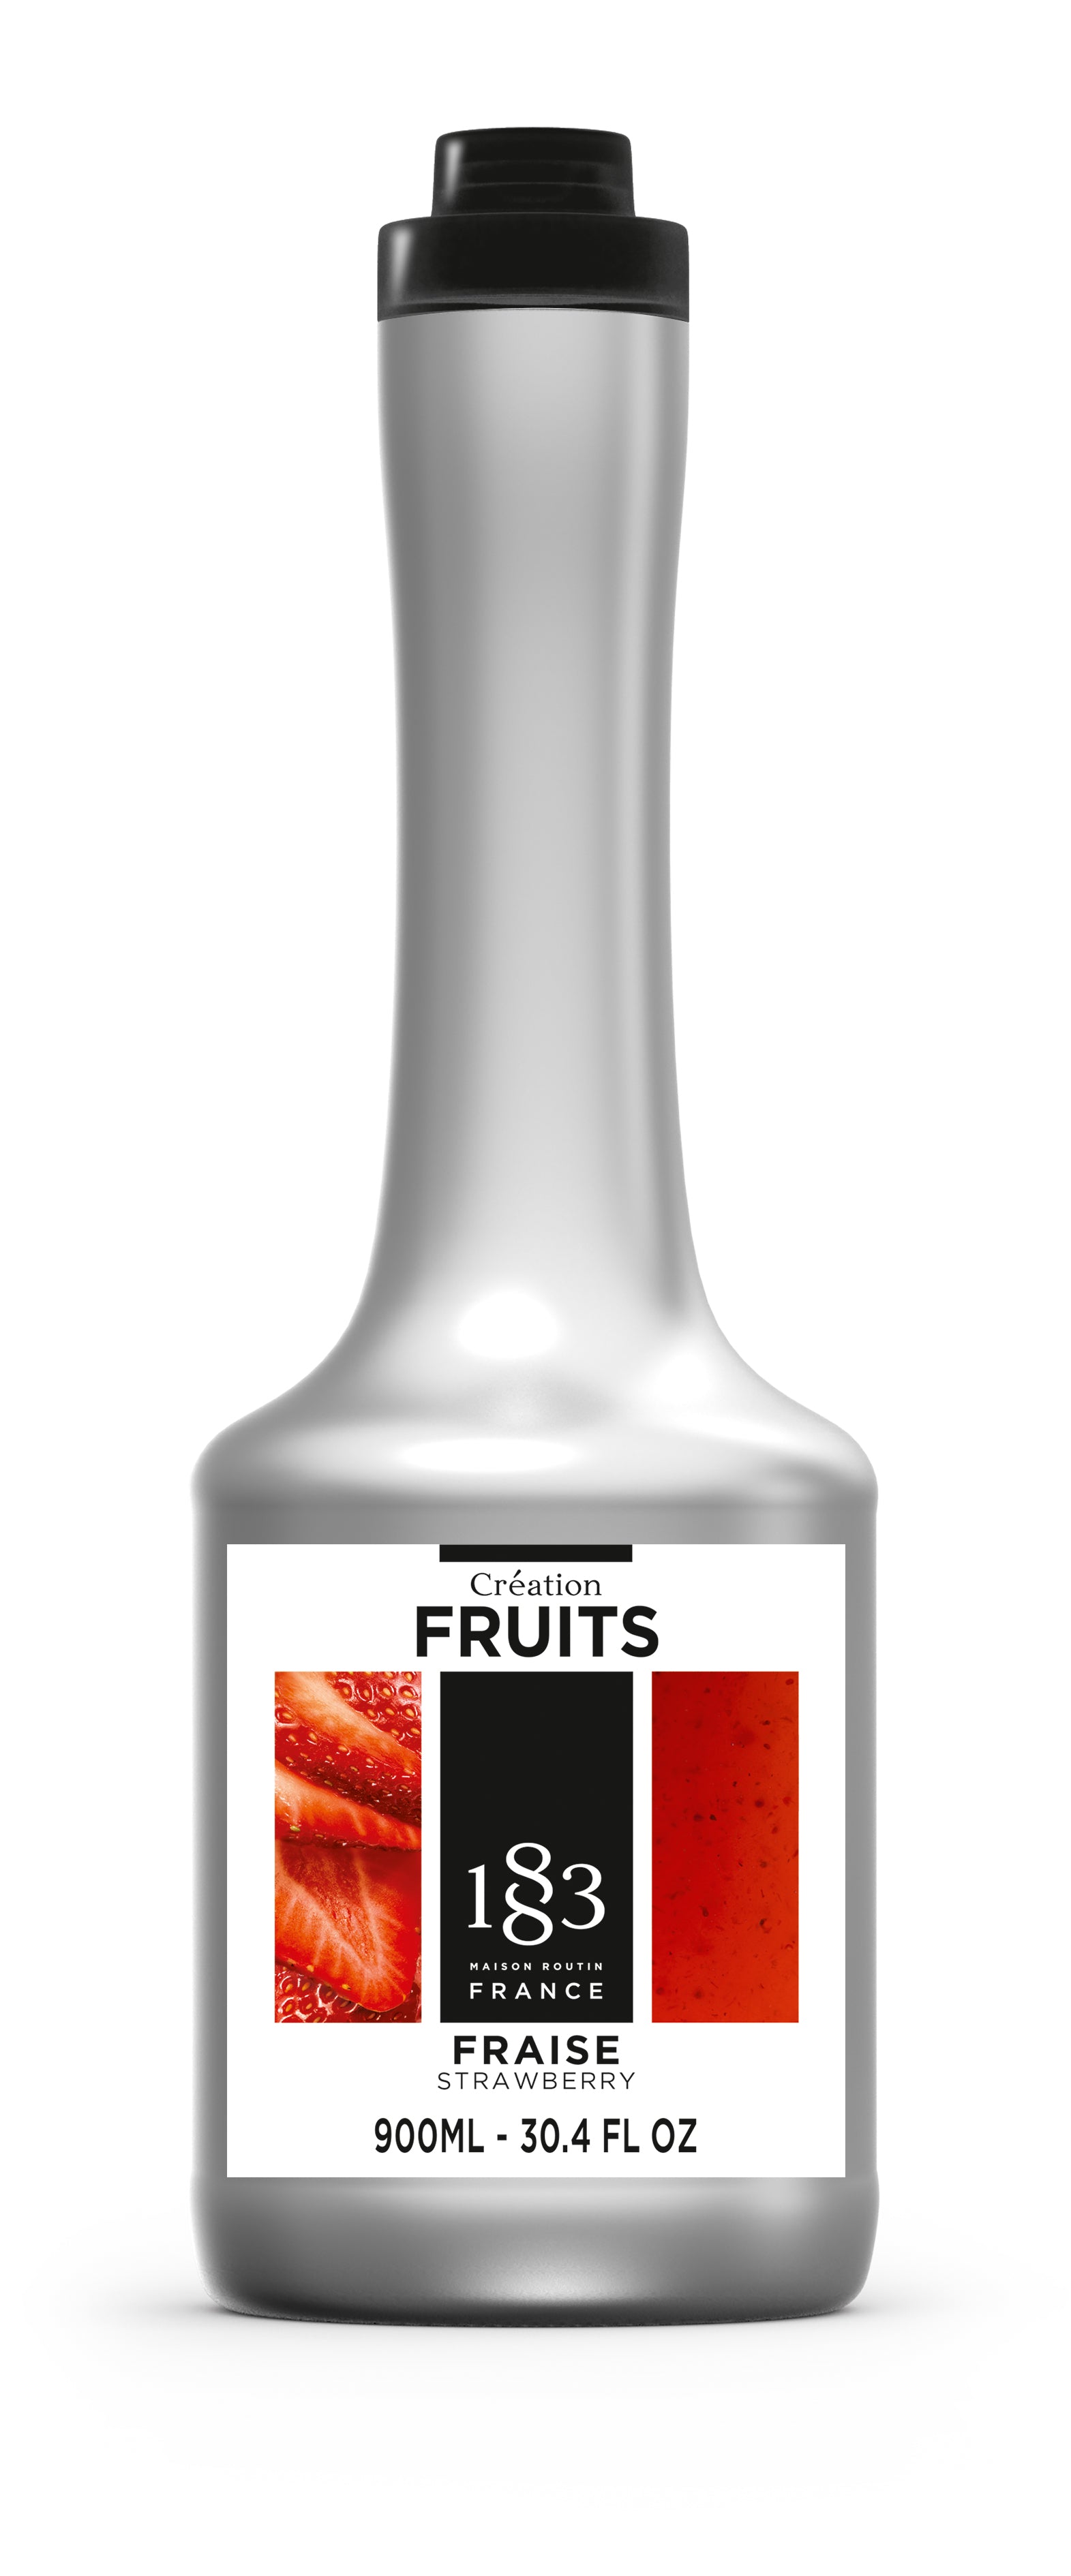 1883 Creation Fruits Fruit Puree - 900ml Plastic Bottle: Strawberry